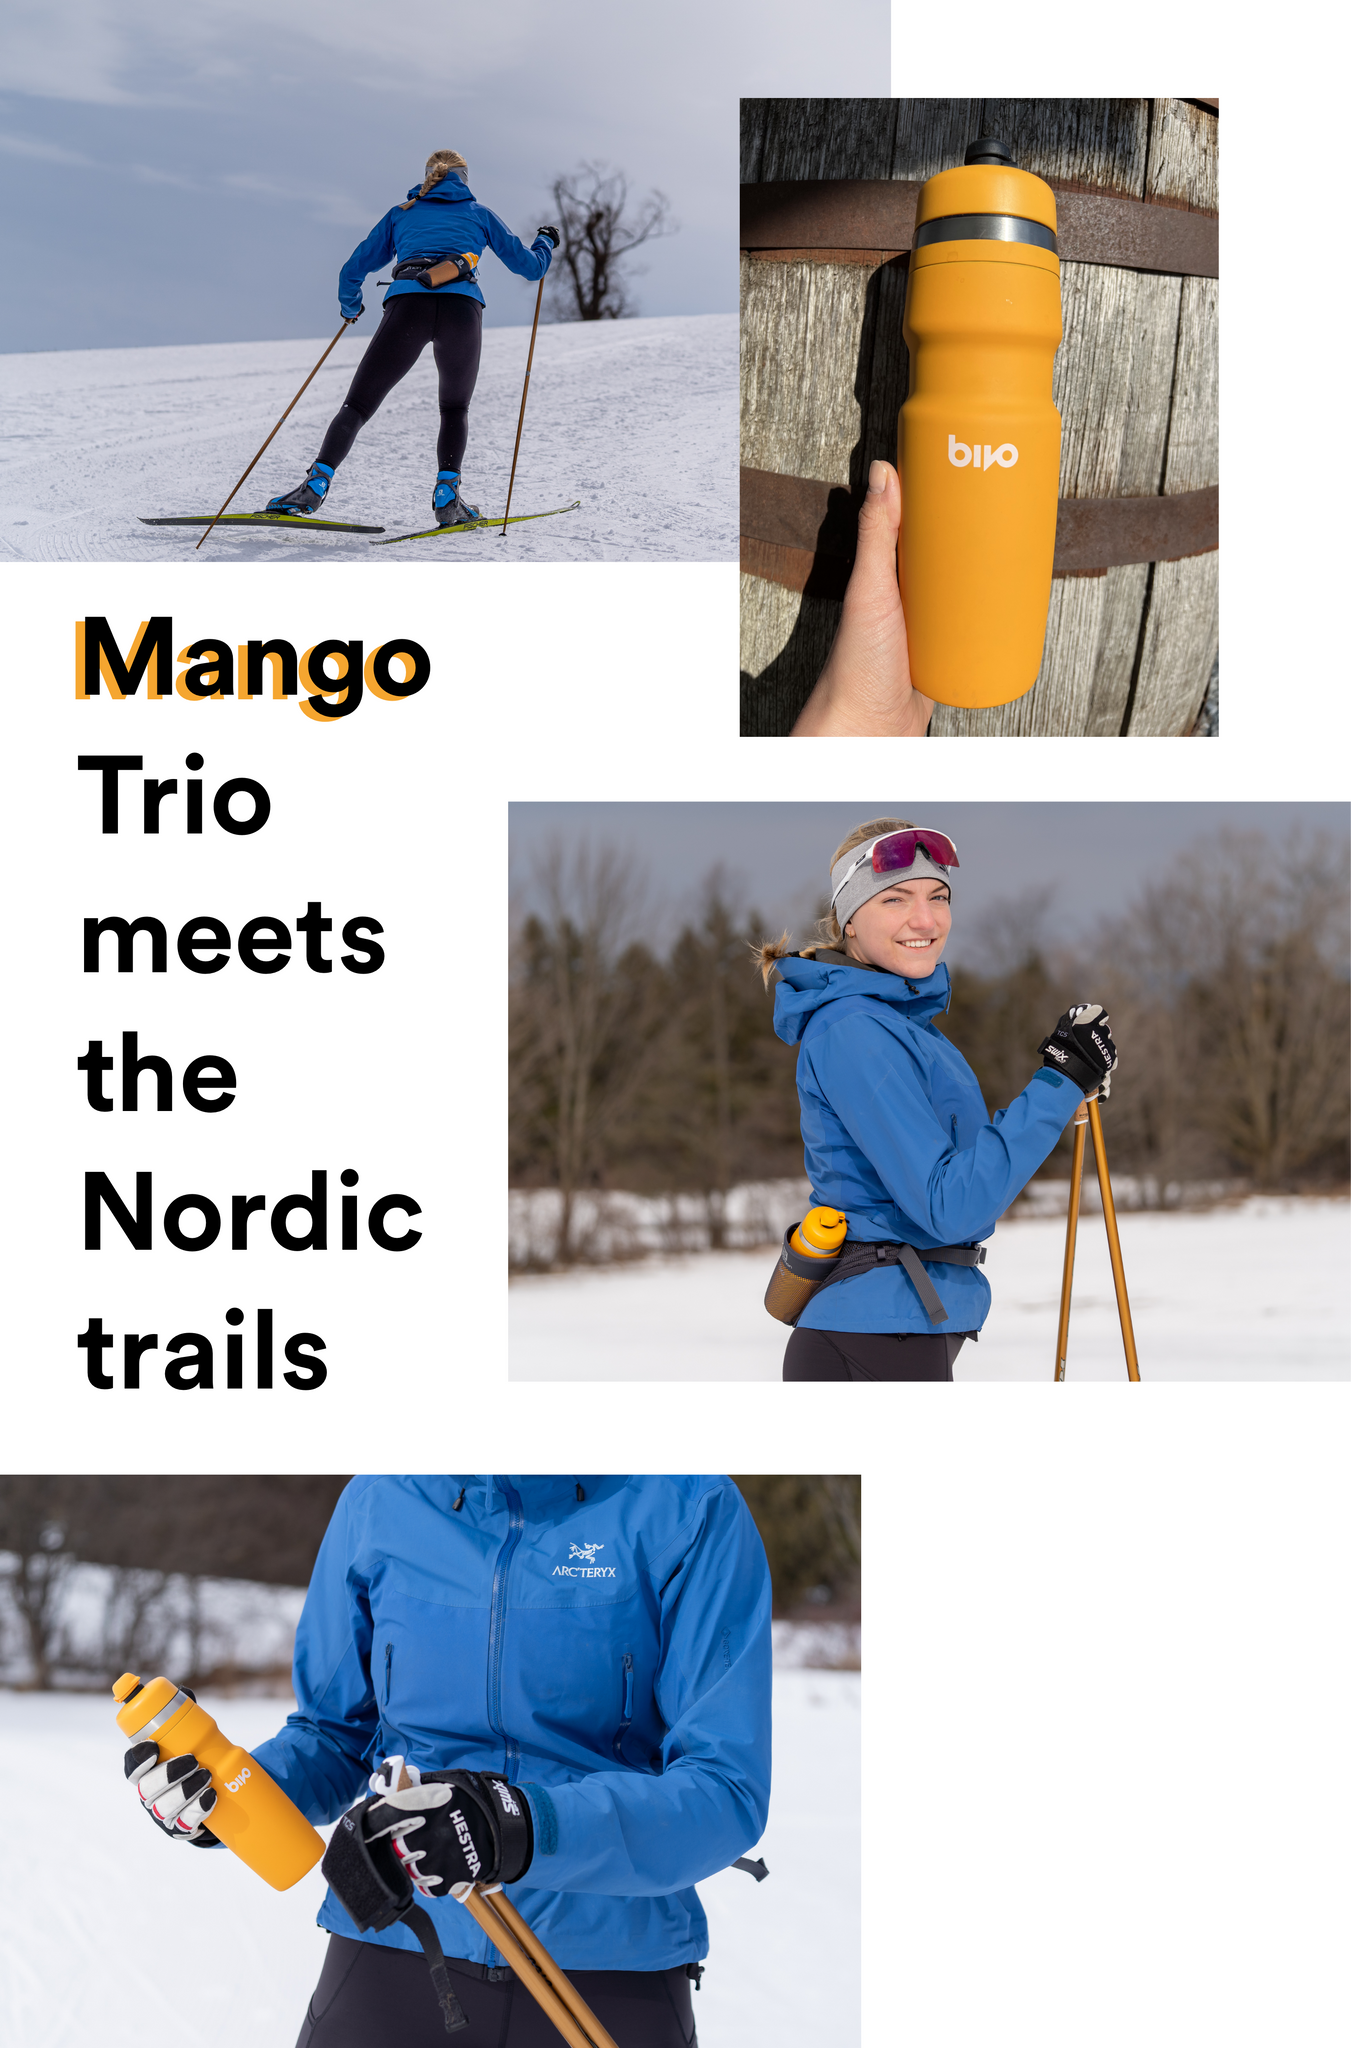 Mango Trio meets the Nordic trails